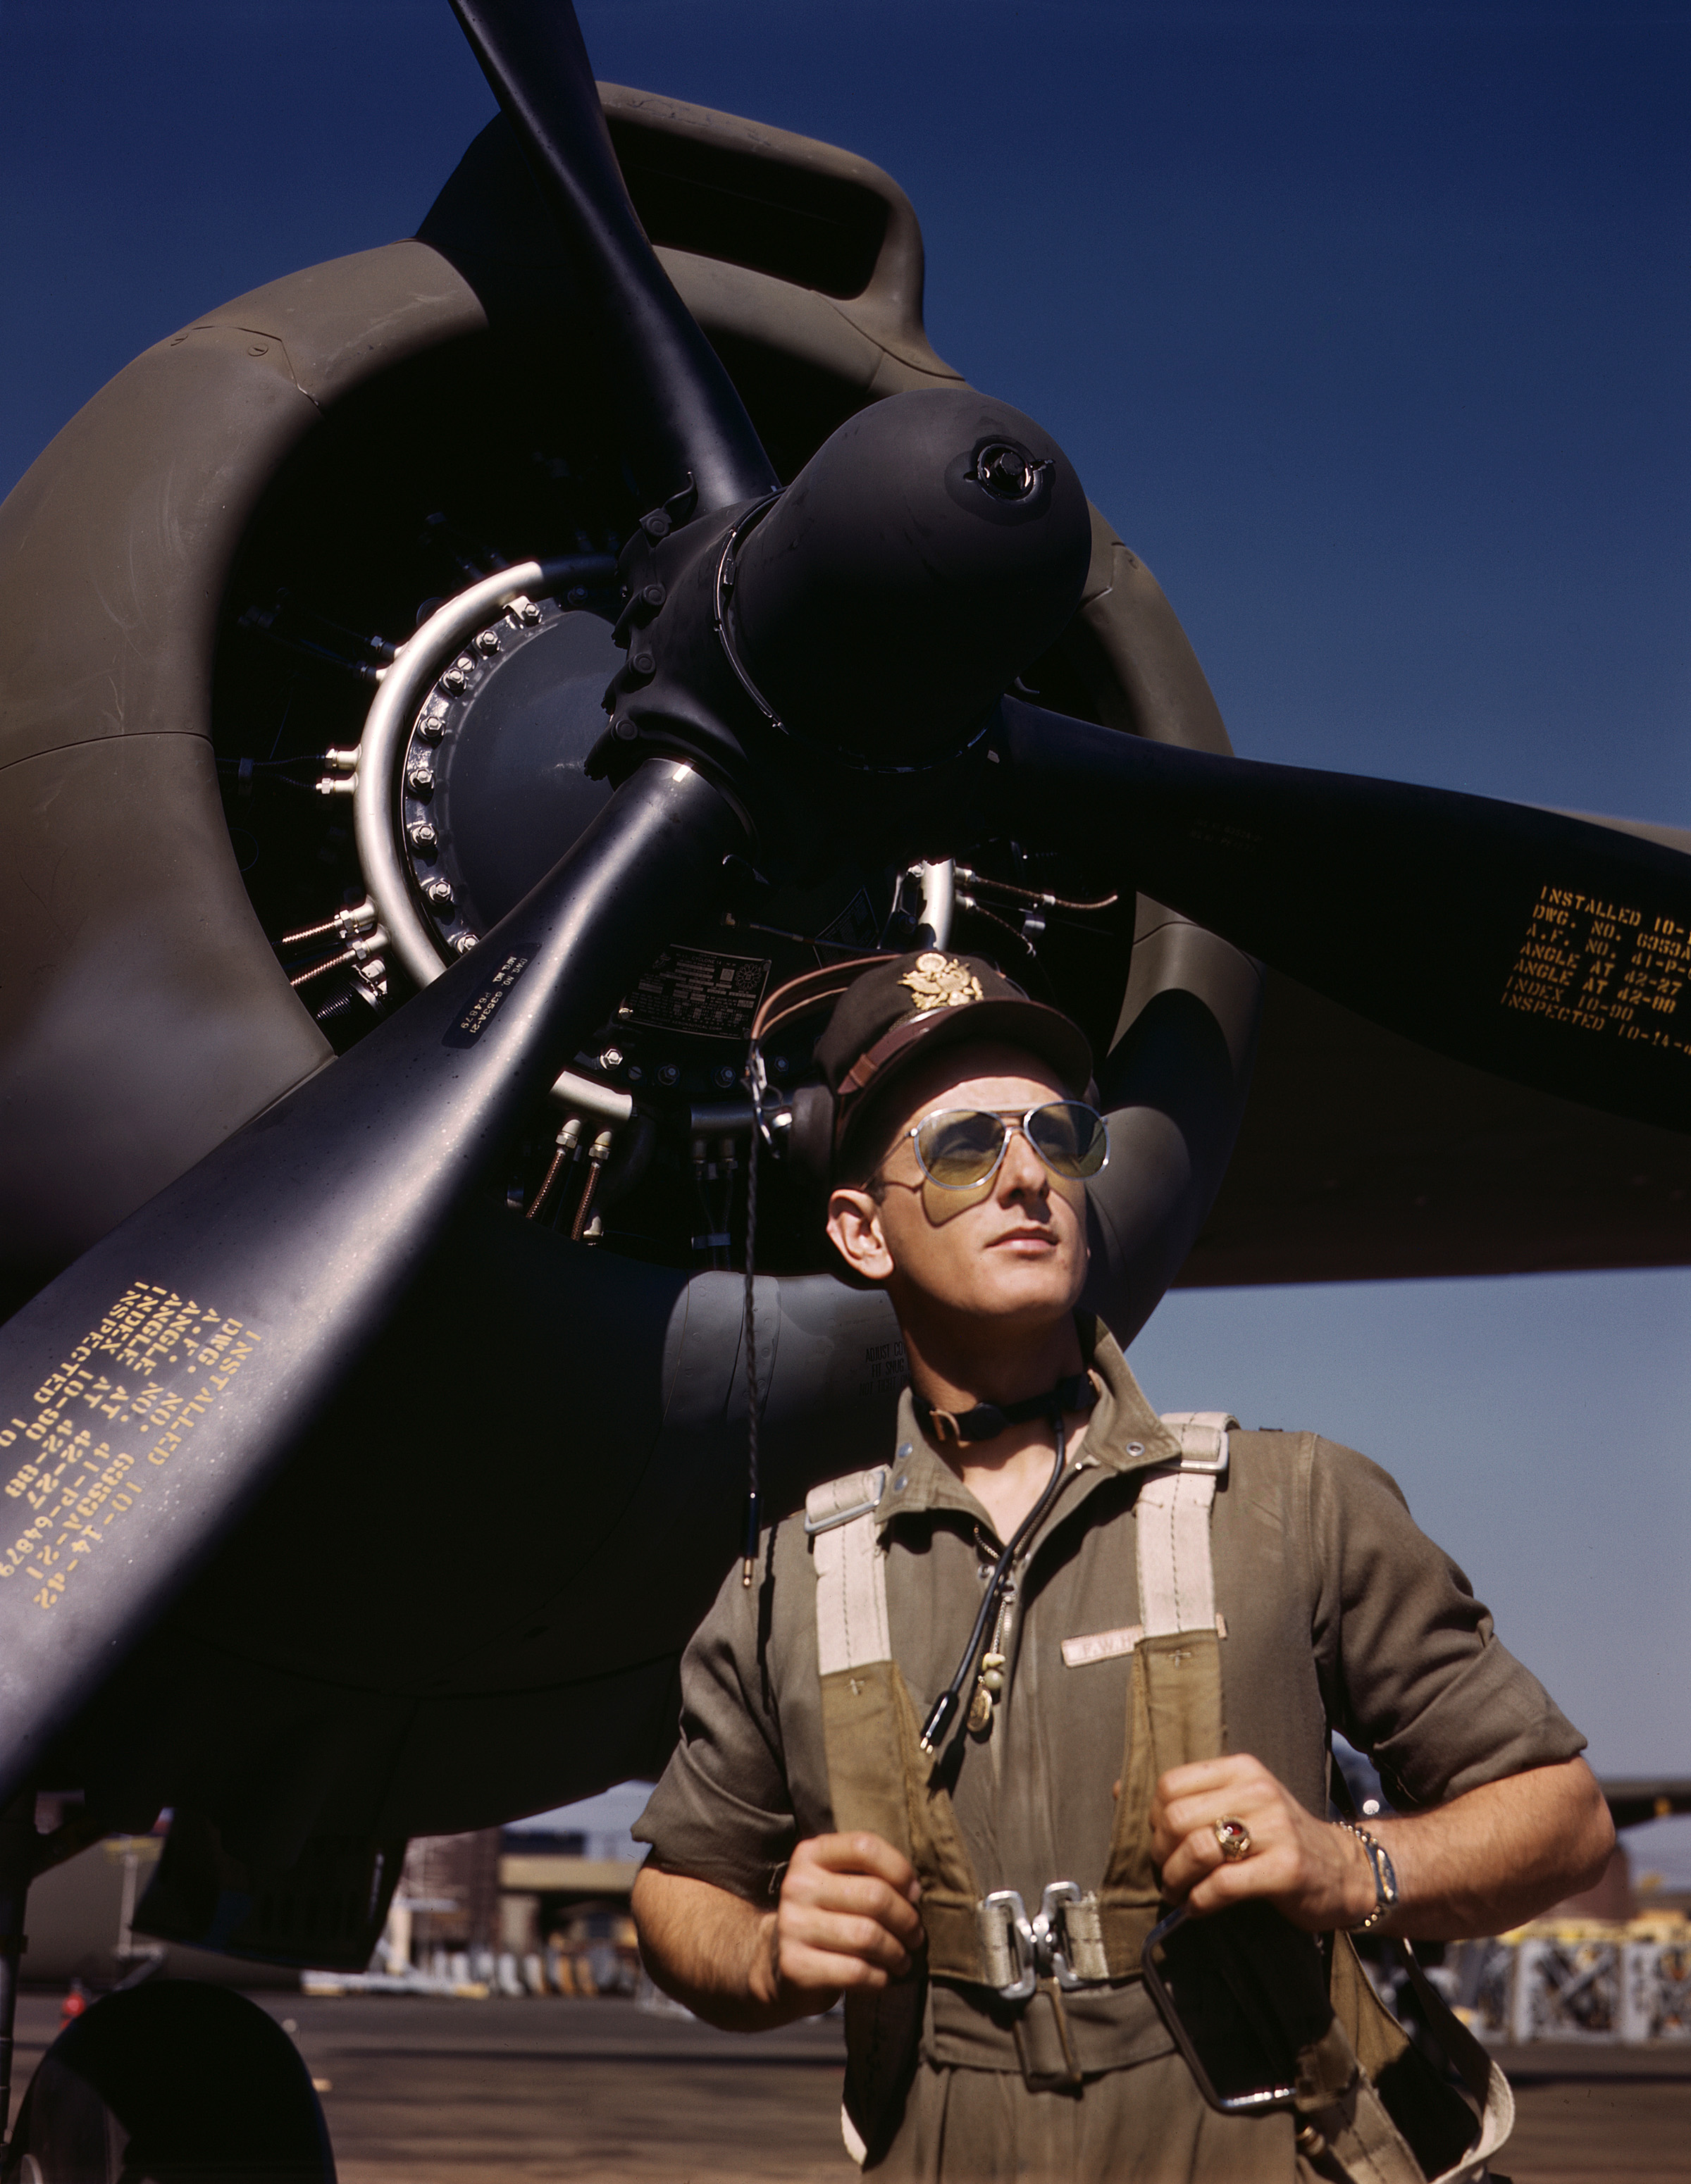 those WWII aviator sunglasses 